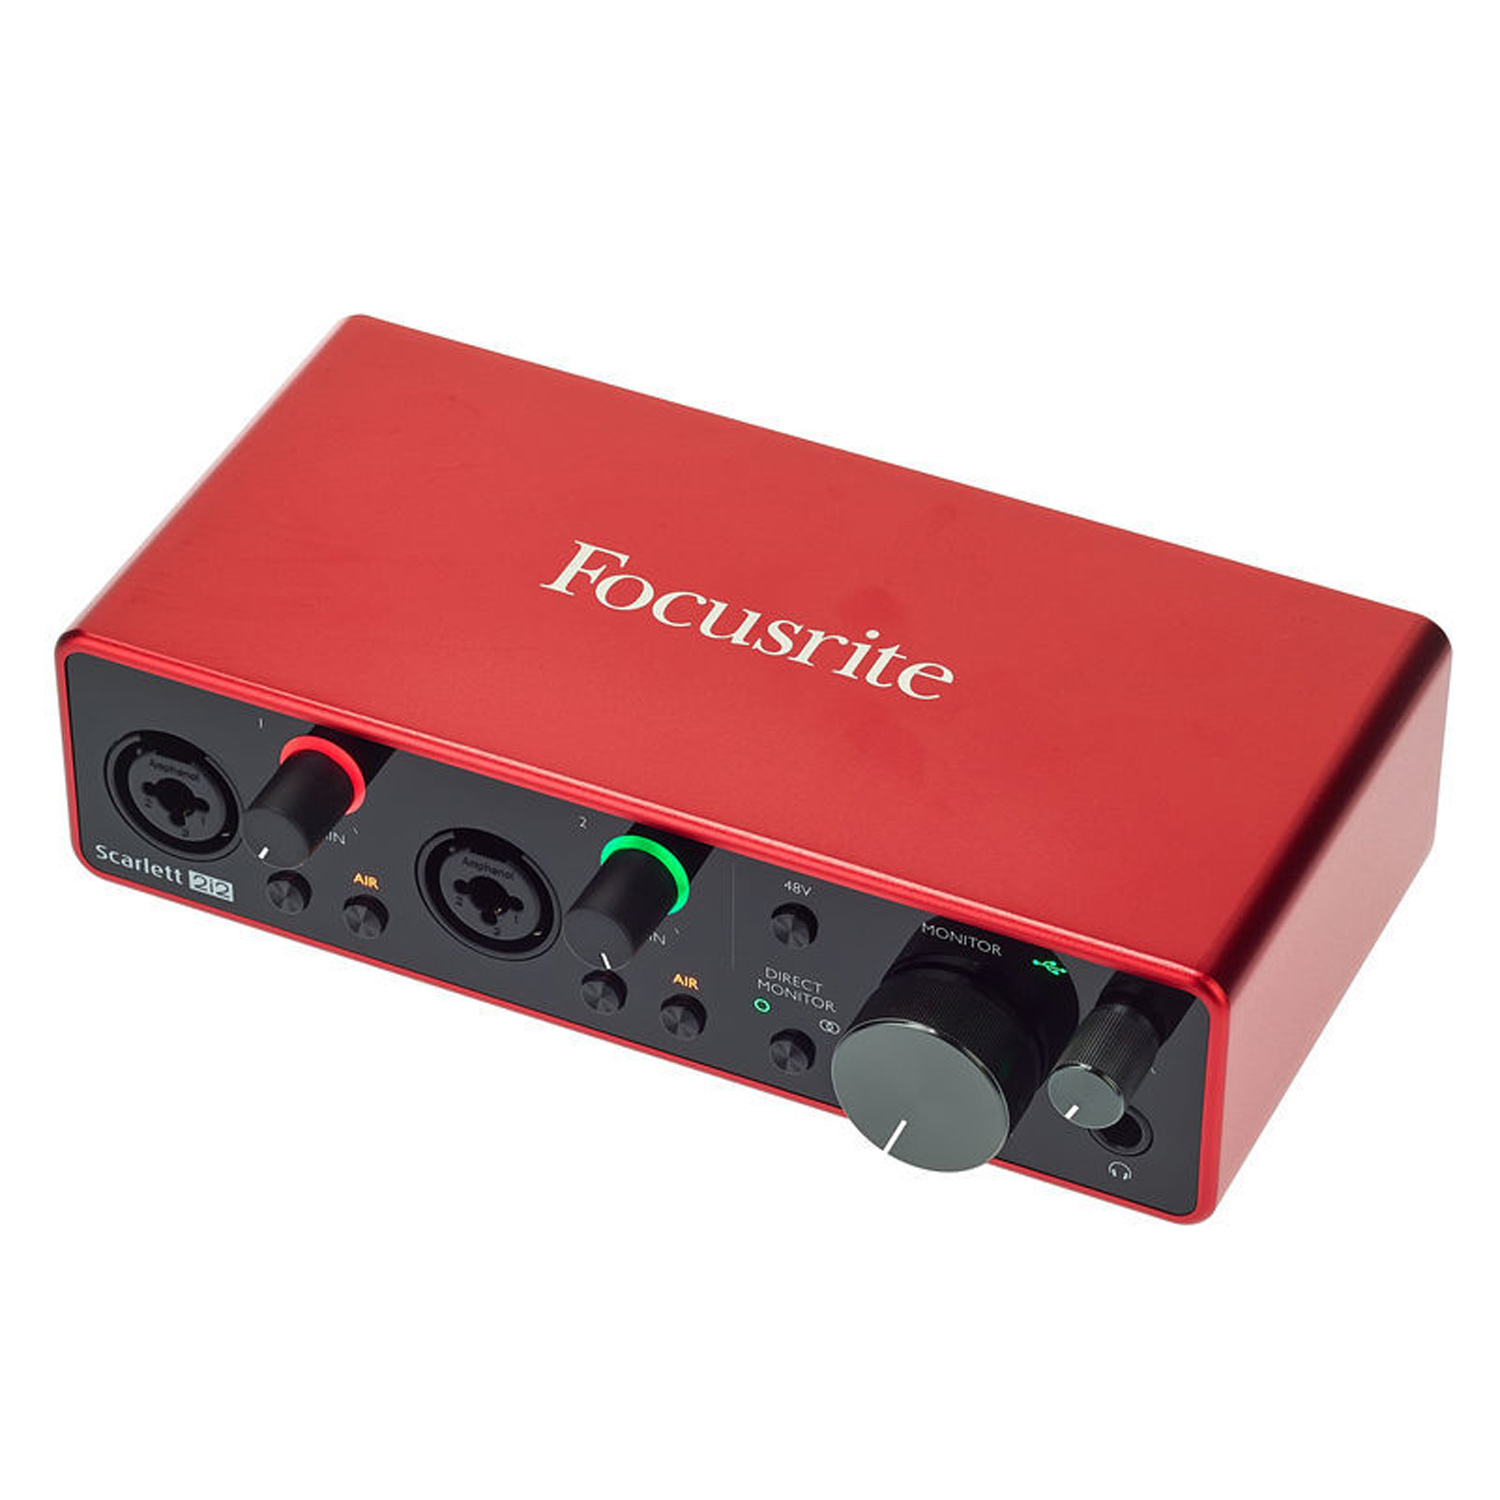 Sound Card Âm Thanh Focusrite Scarlett 2i2 Gen 3 - USB Audio Interface With Pro Tools (3rd Generation) - Kèm Móng Gảy DreamMaker